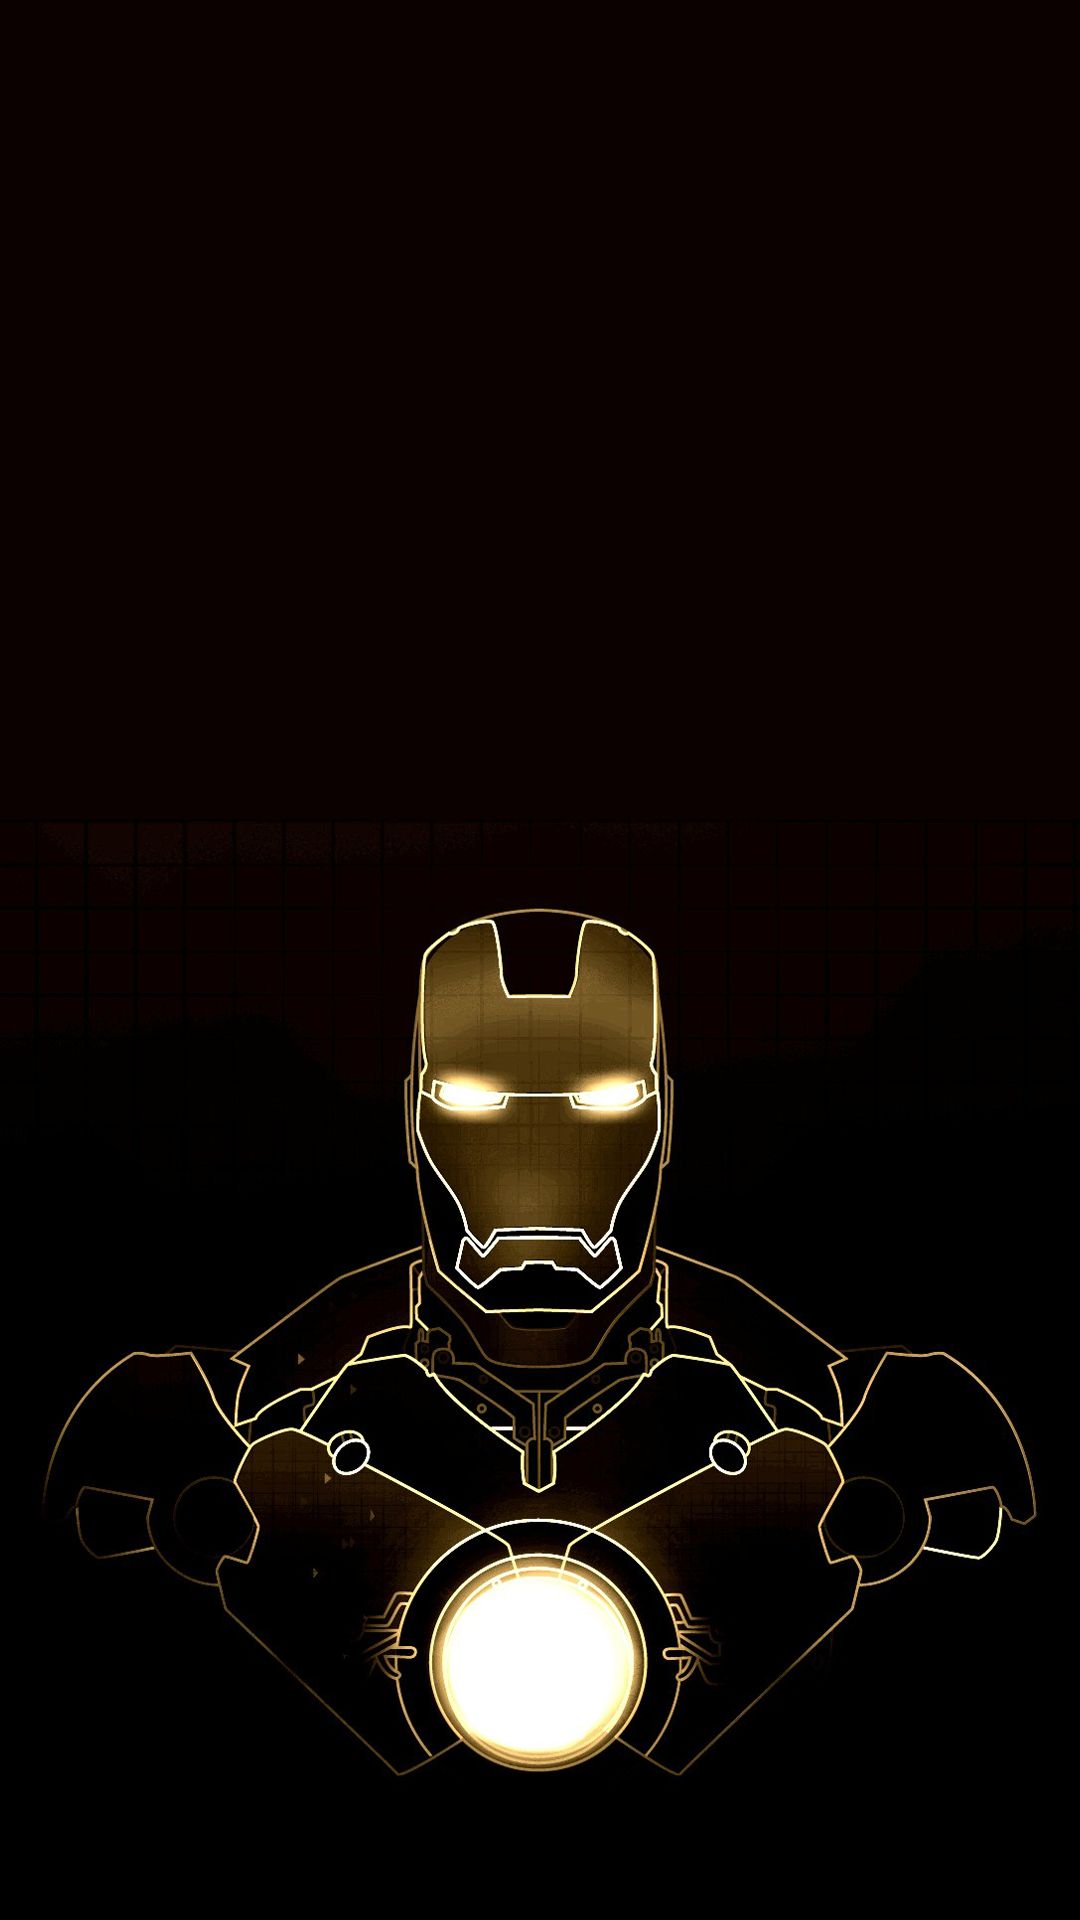 Marvel iPhone 7 wallpaper